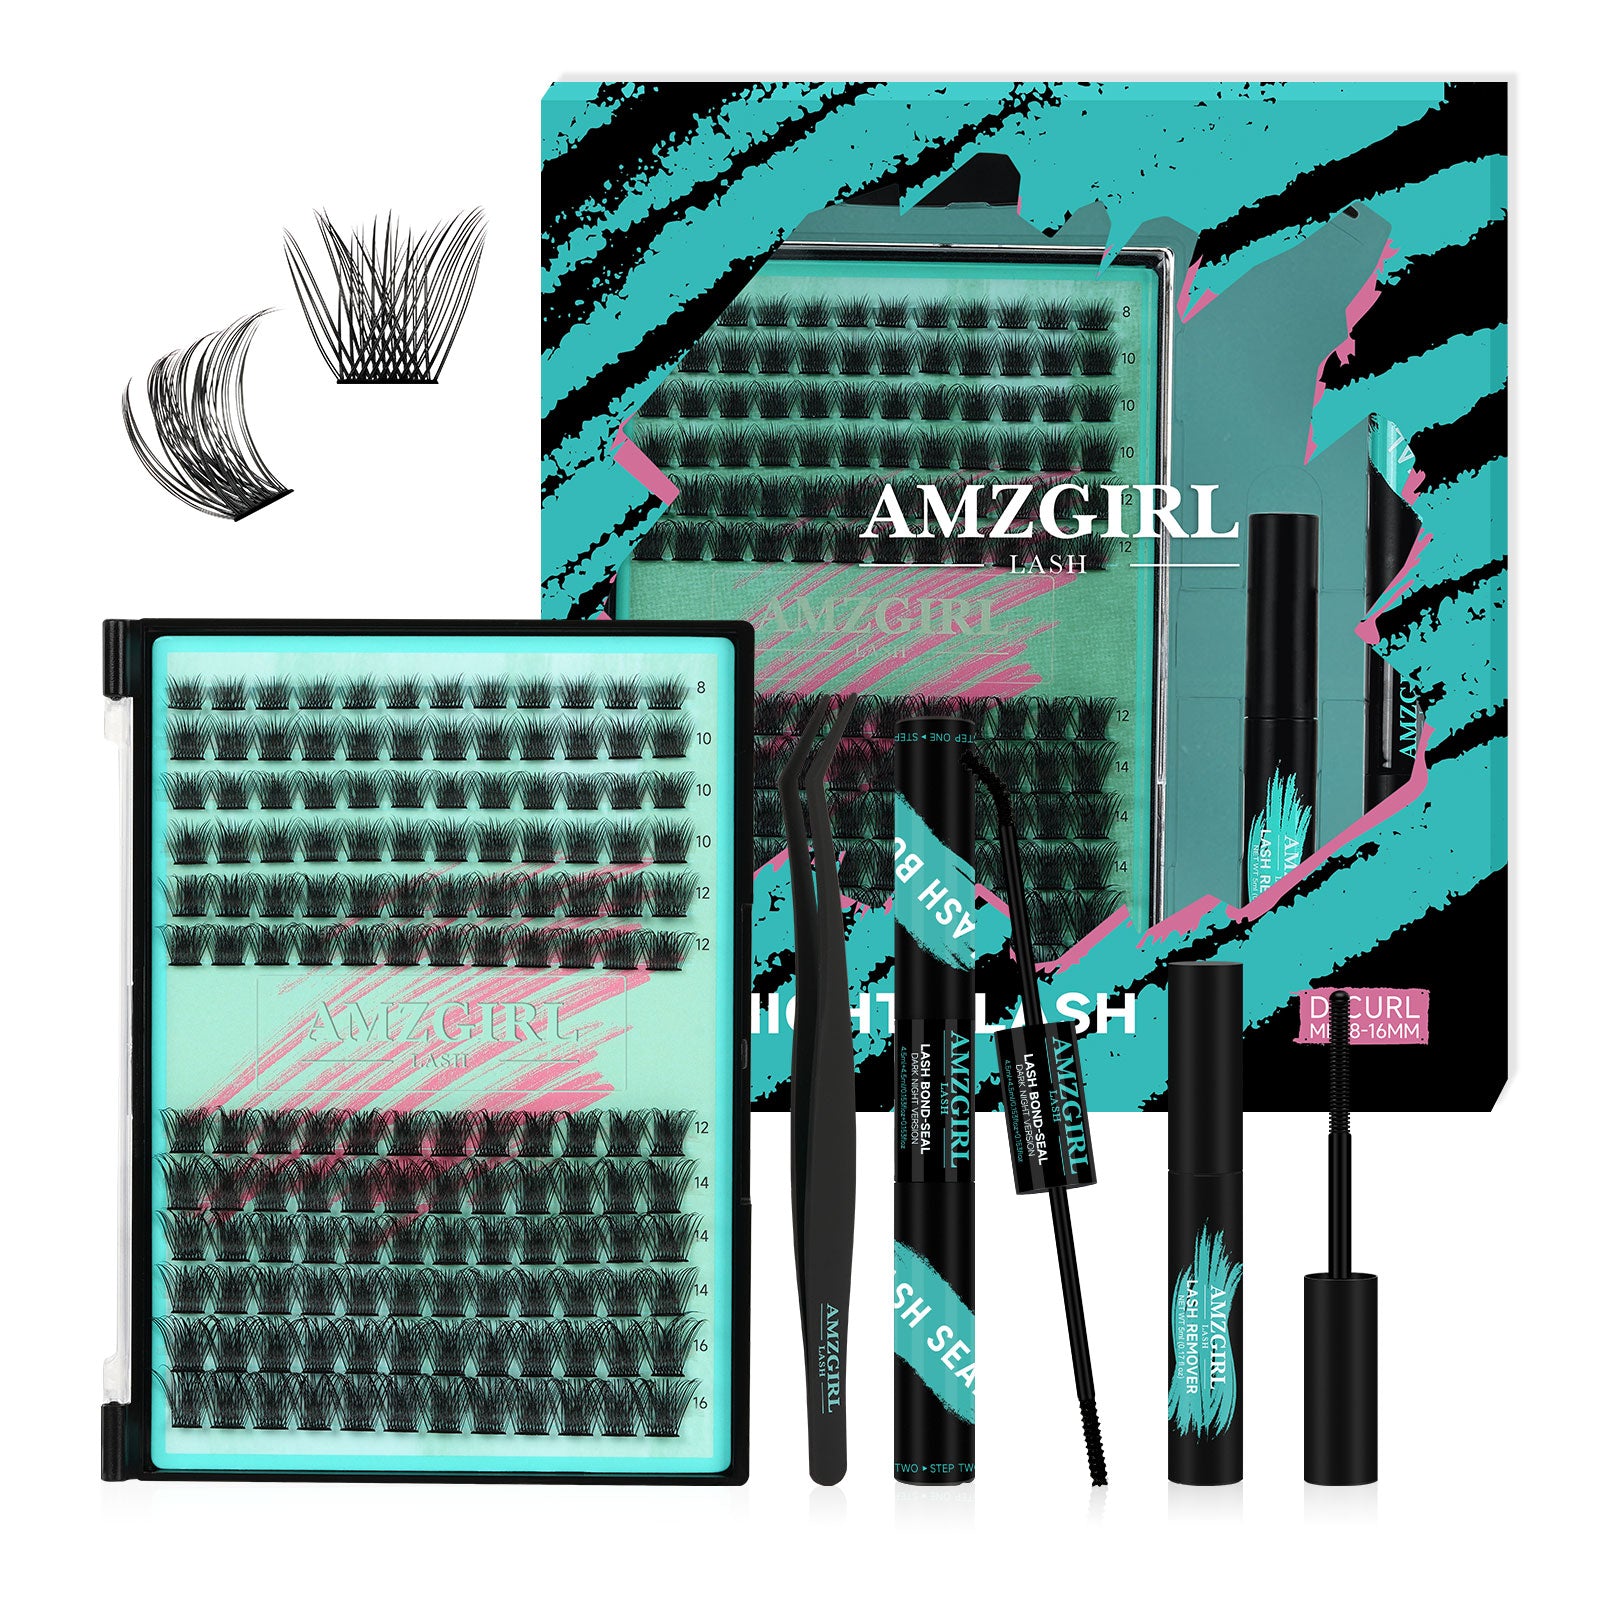 AMZGIRL Midnight DIY Lash clusters kit 144 pcs